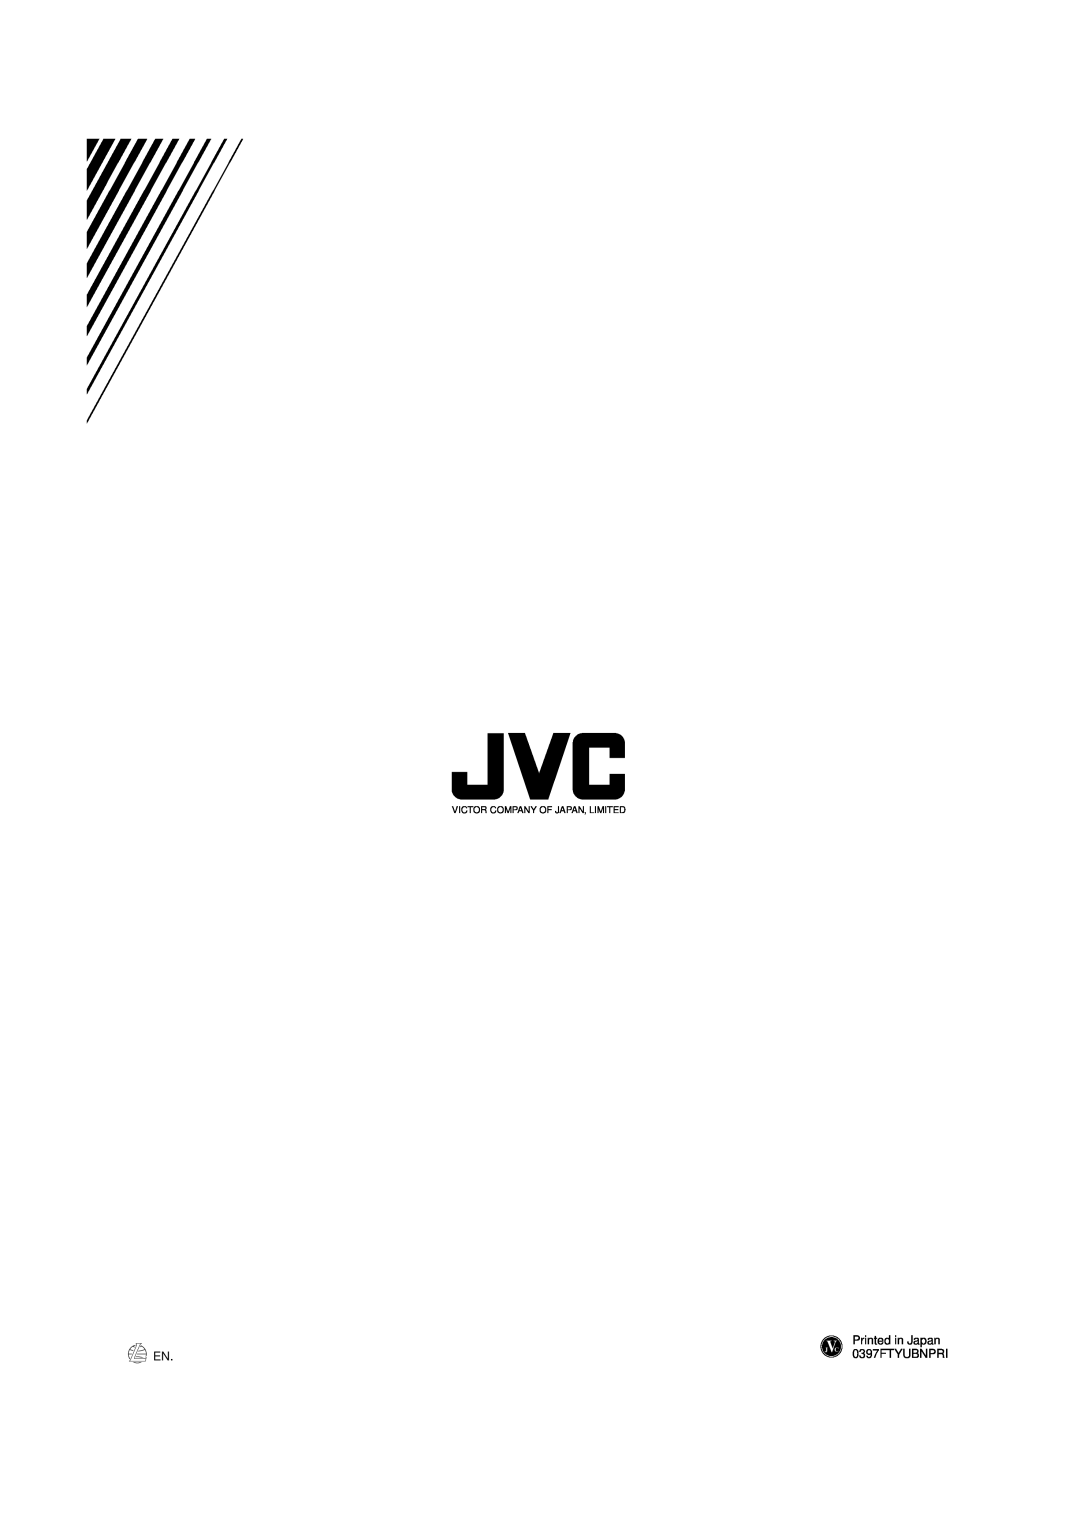 JVC XV-1000BK manual 0397FTYUBNPRI, Victor Company Of Japan, Limited 